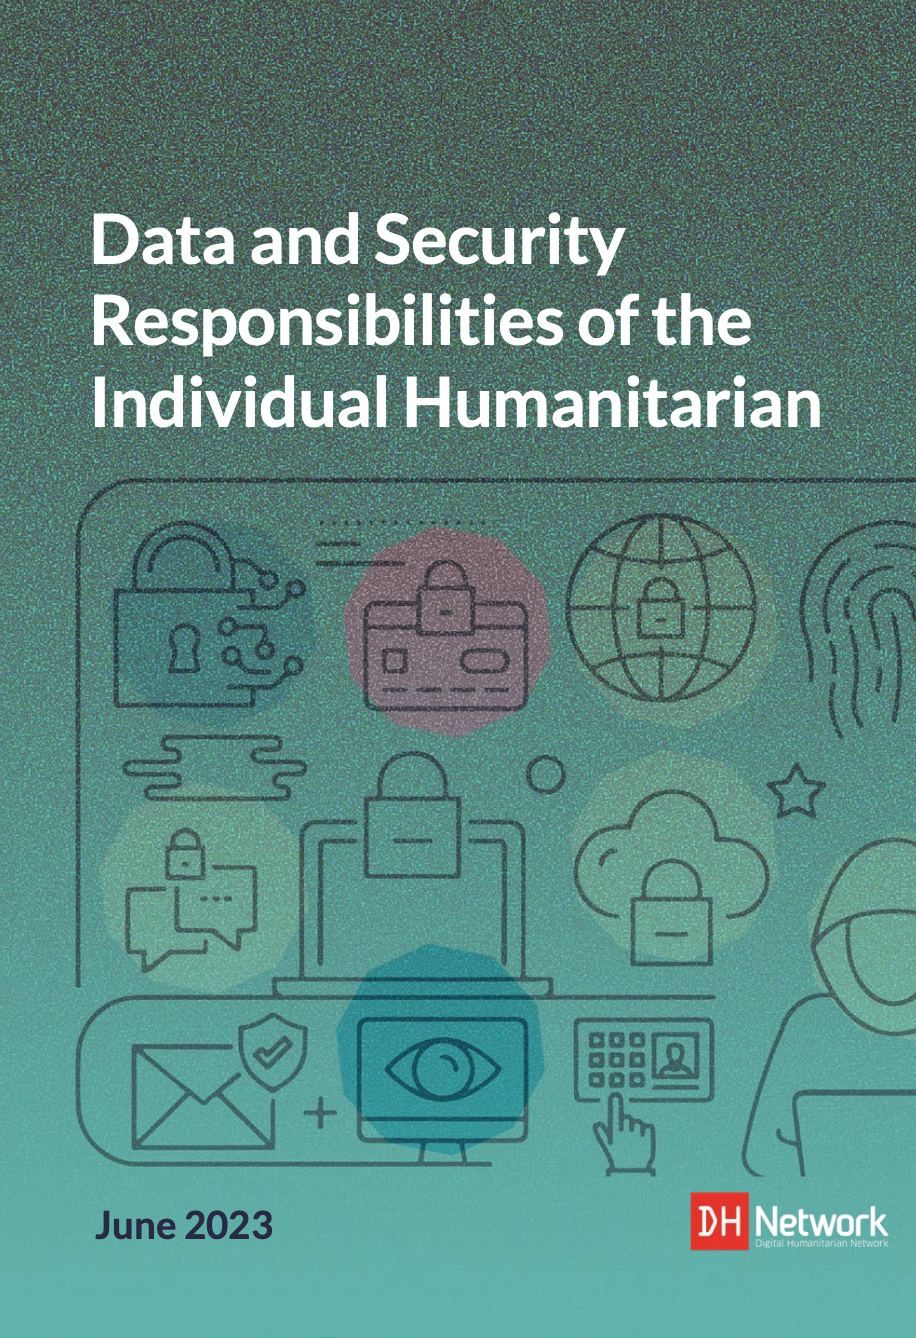 Data and Security Responsibilities of the Individual Humanitarian - June 2023